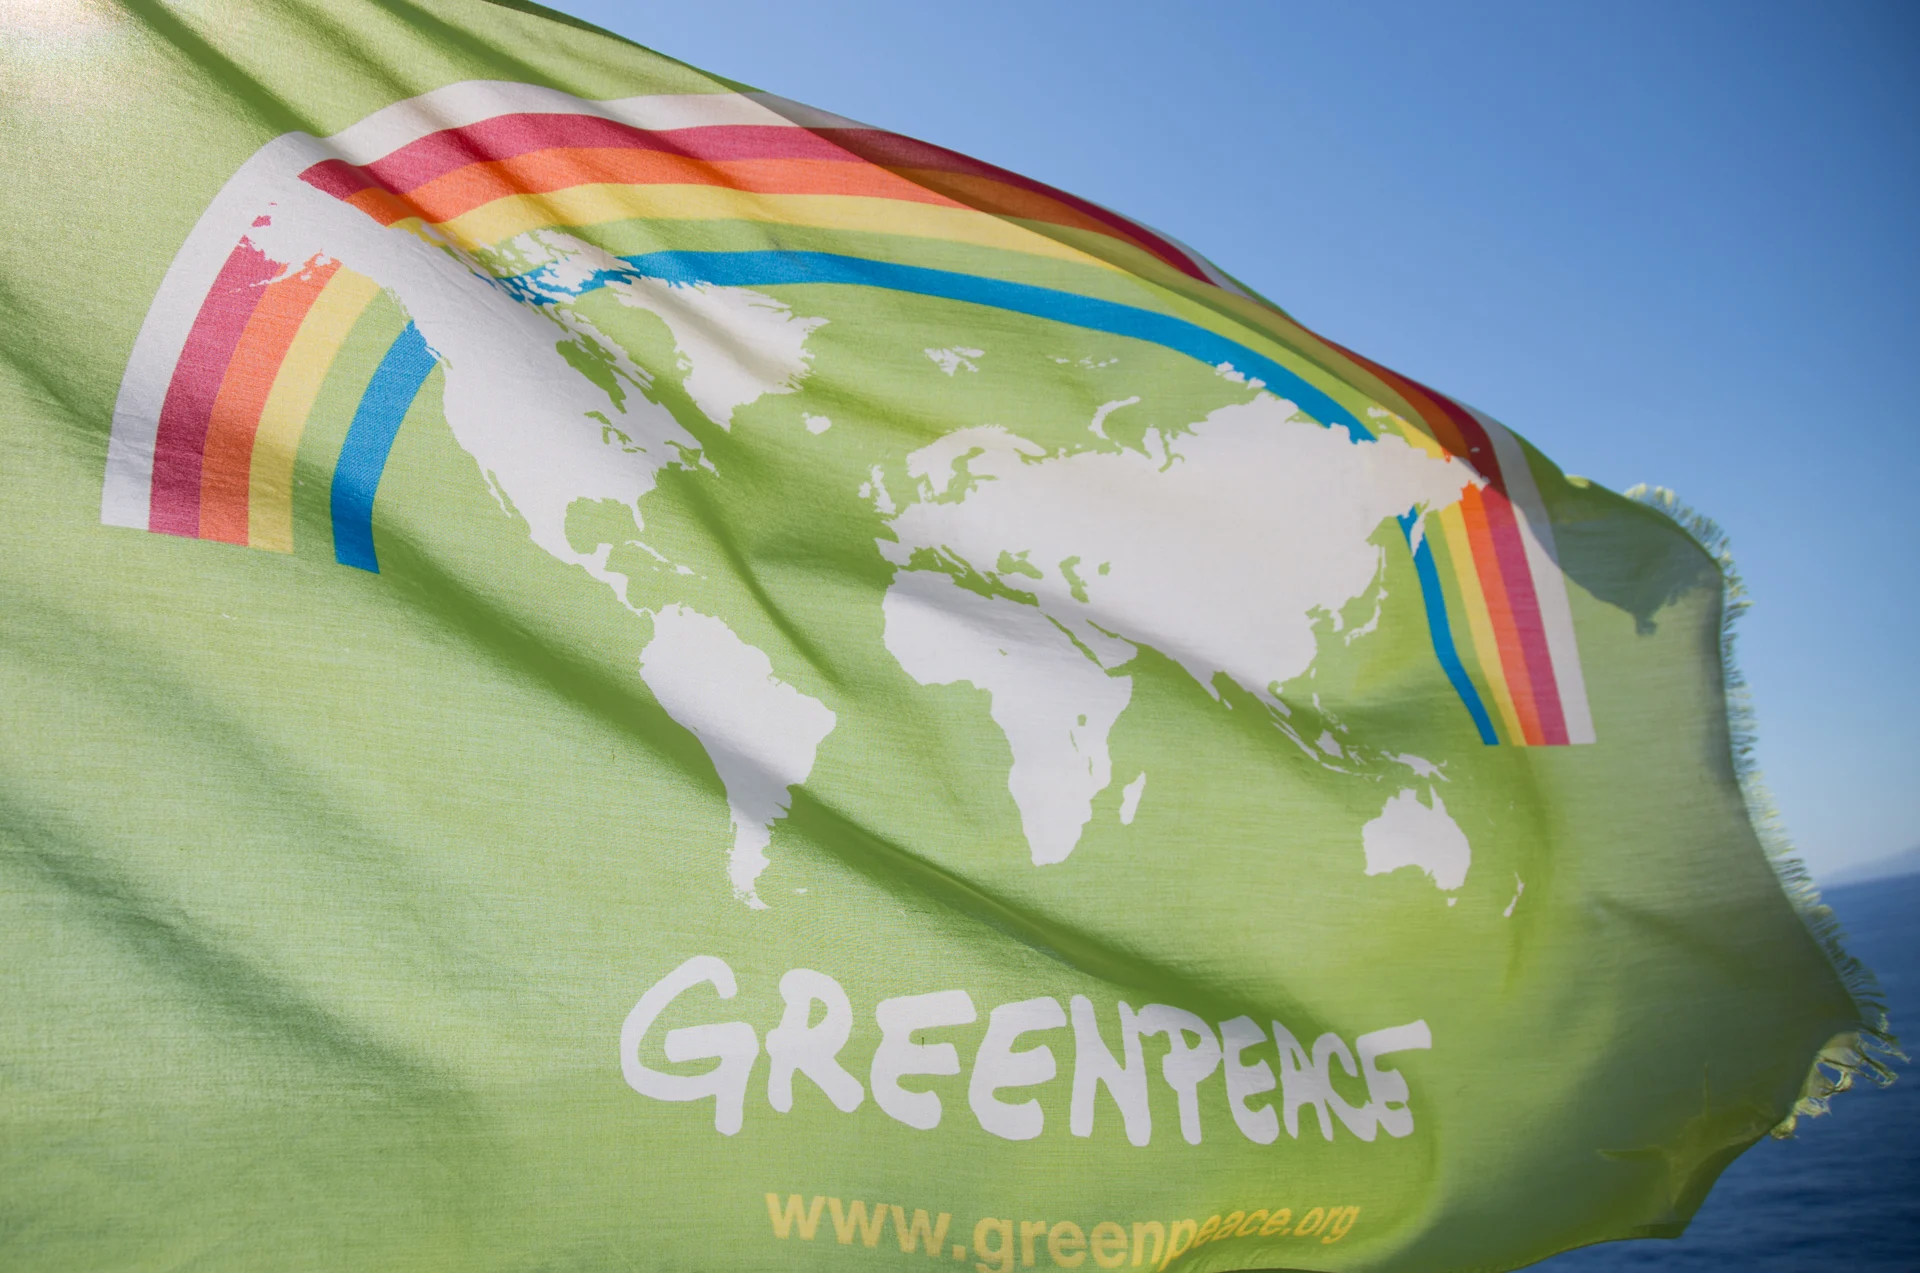 Greenpeace: Οι μεγάλες ευρωπαϊκές πετρελαϊκές εταιρείες δεν κάνουν τίποτα για την ενεργειακή μετάβαση